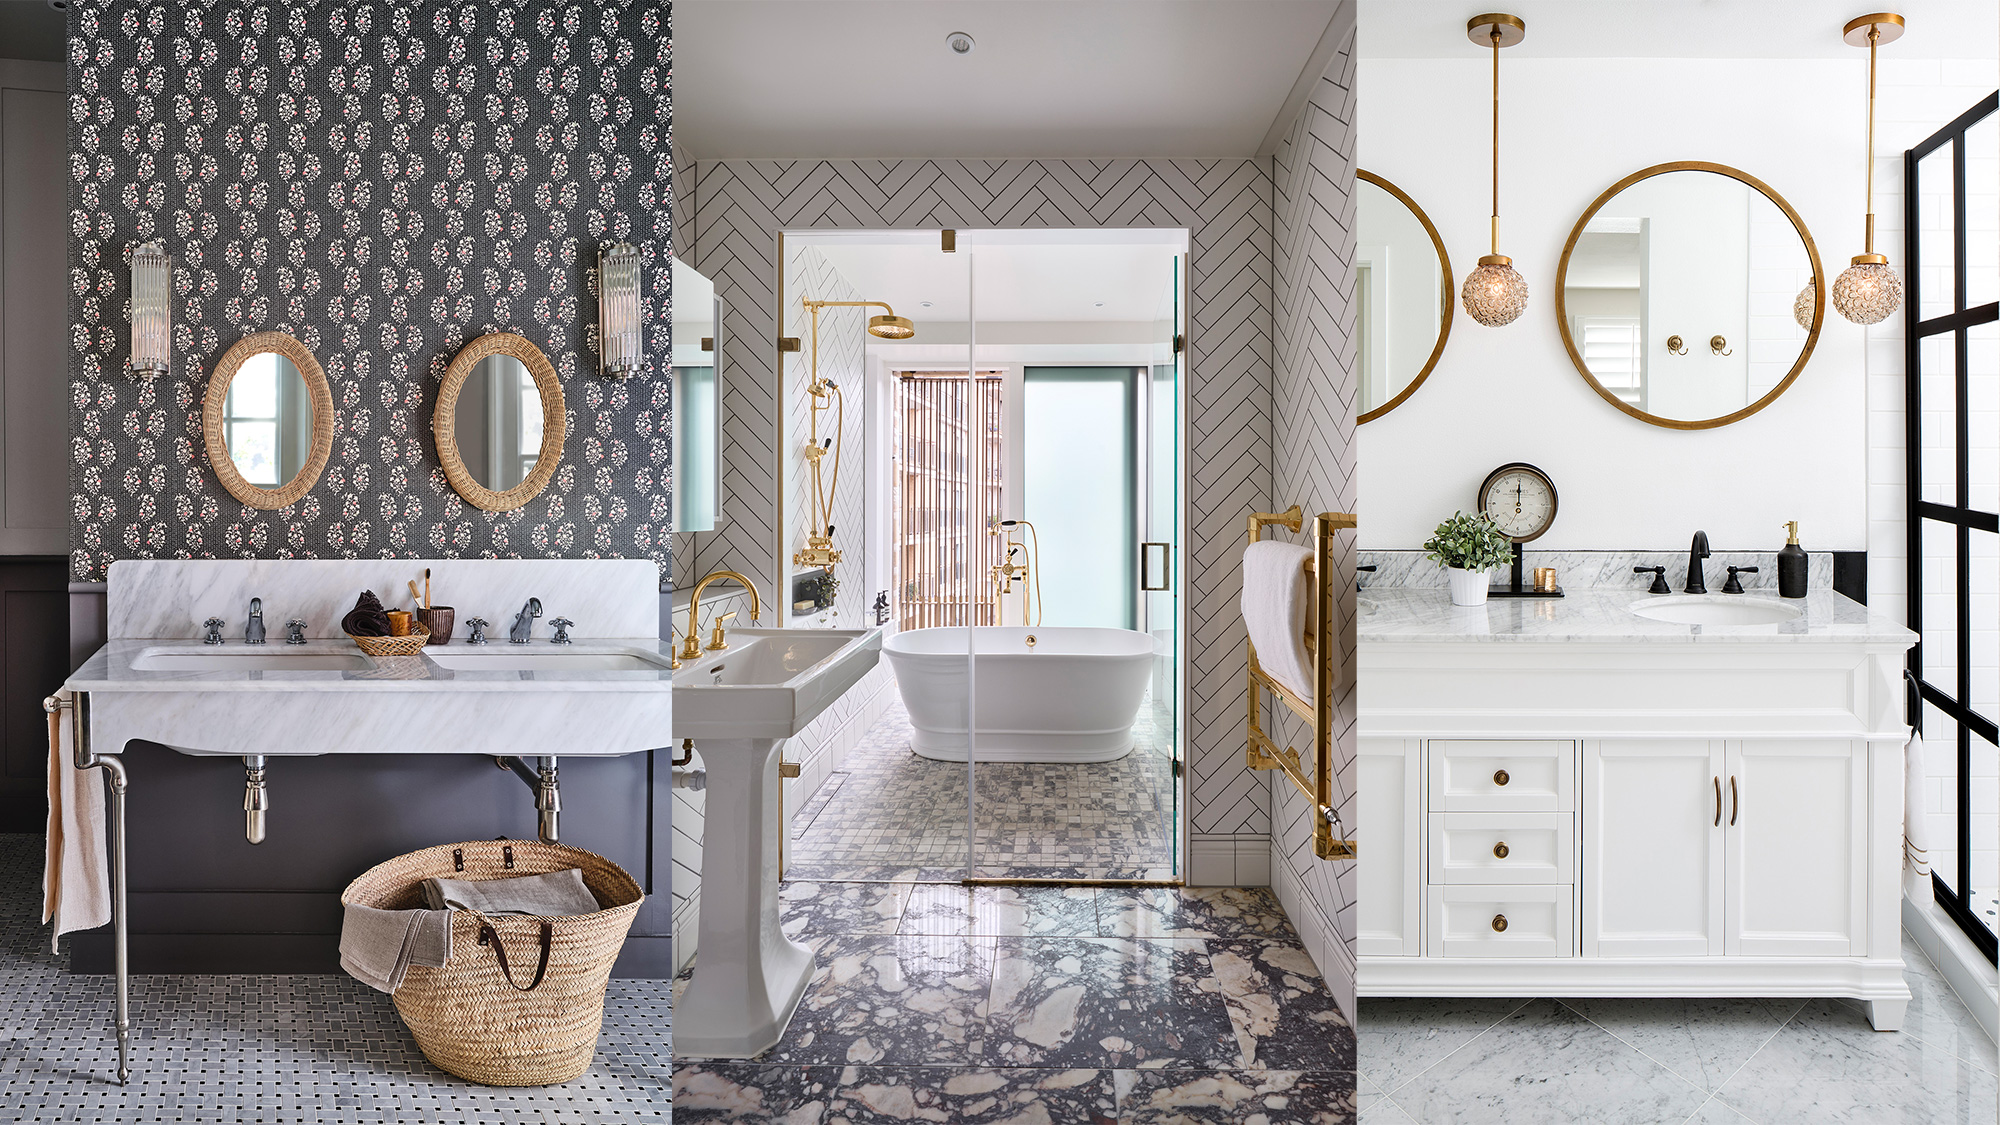 grey and white bathroom ideas: 11 inspiring monochrome schemes |